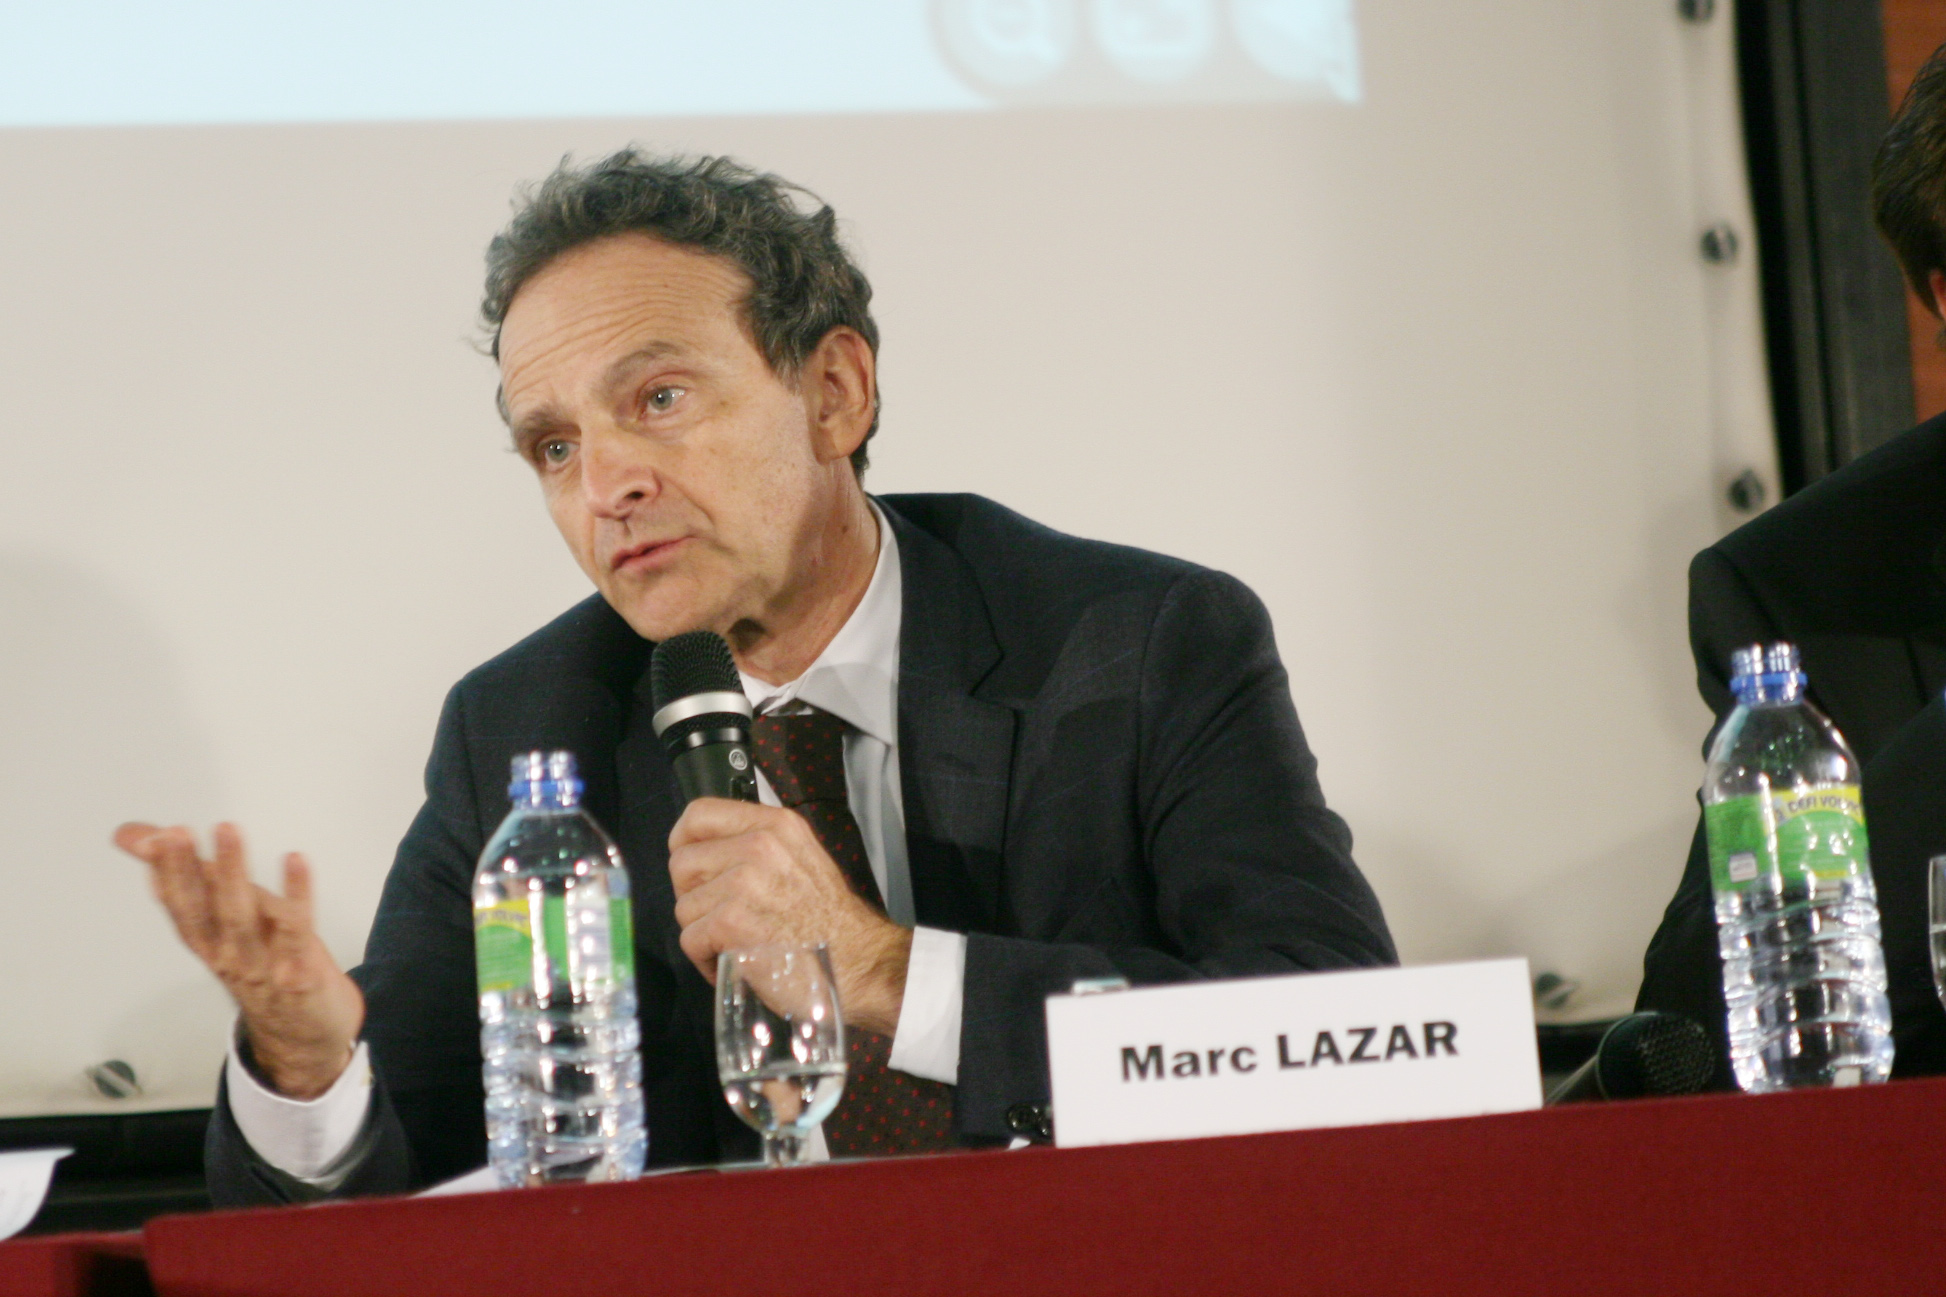 Tarantino intervista Lazar